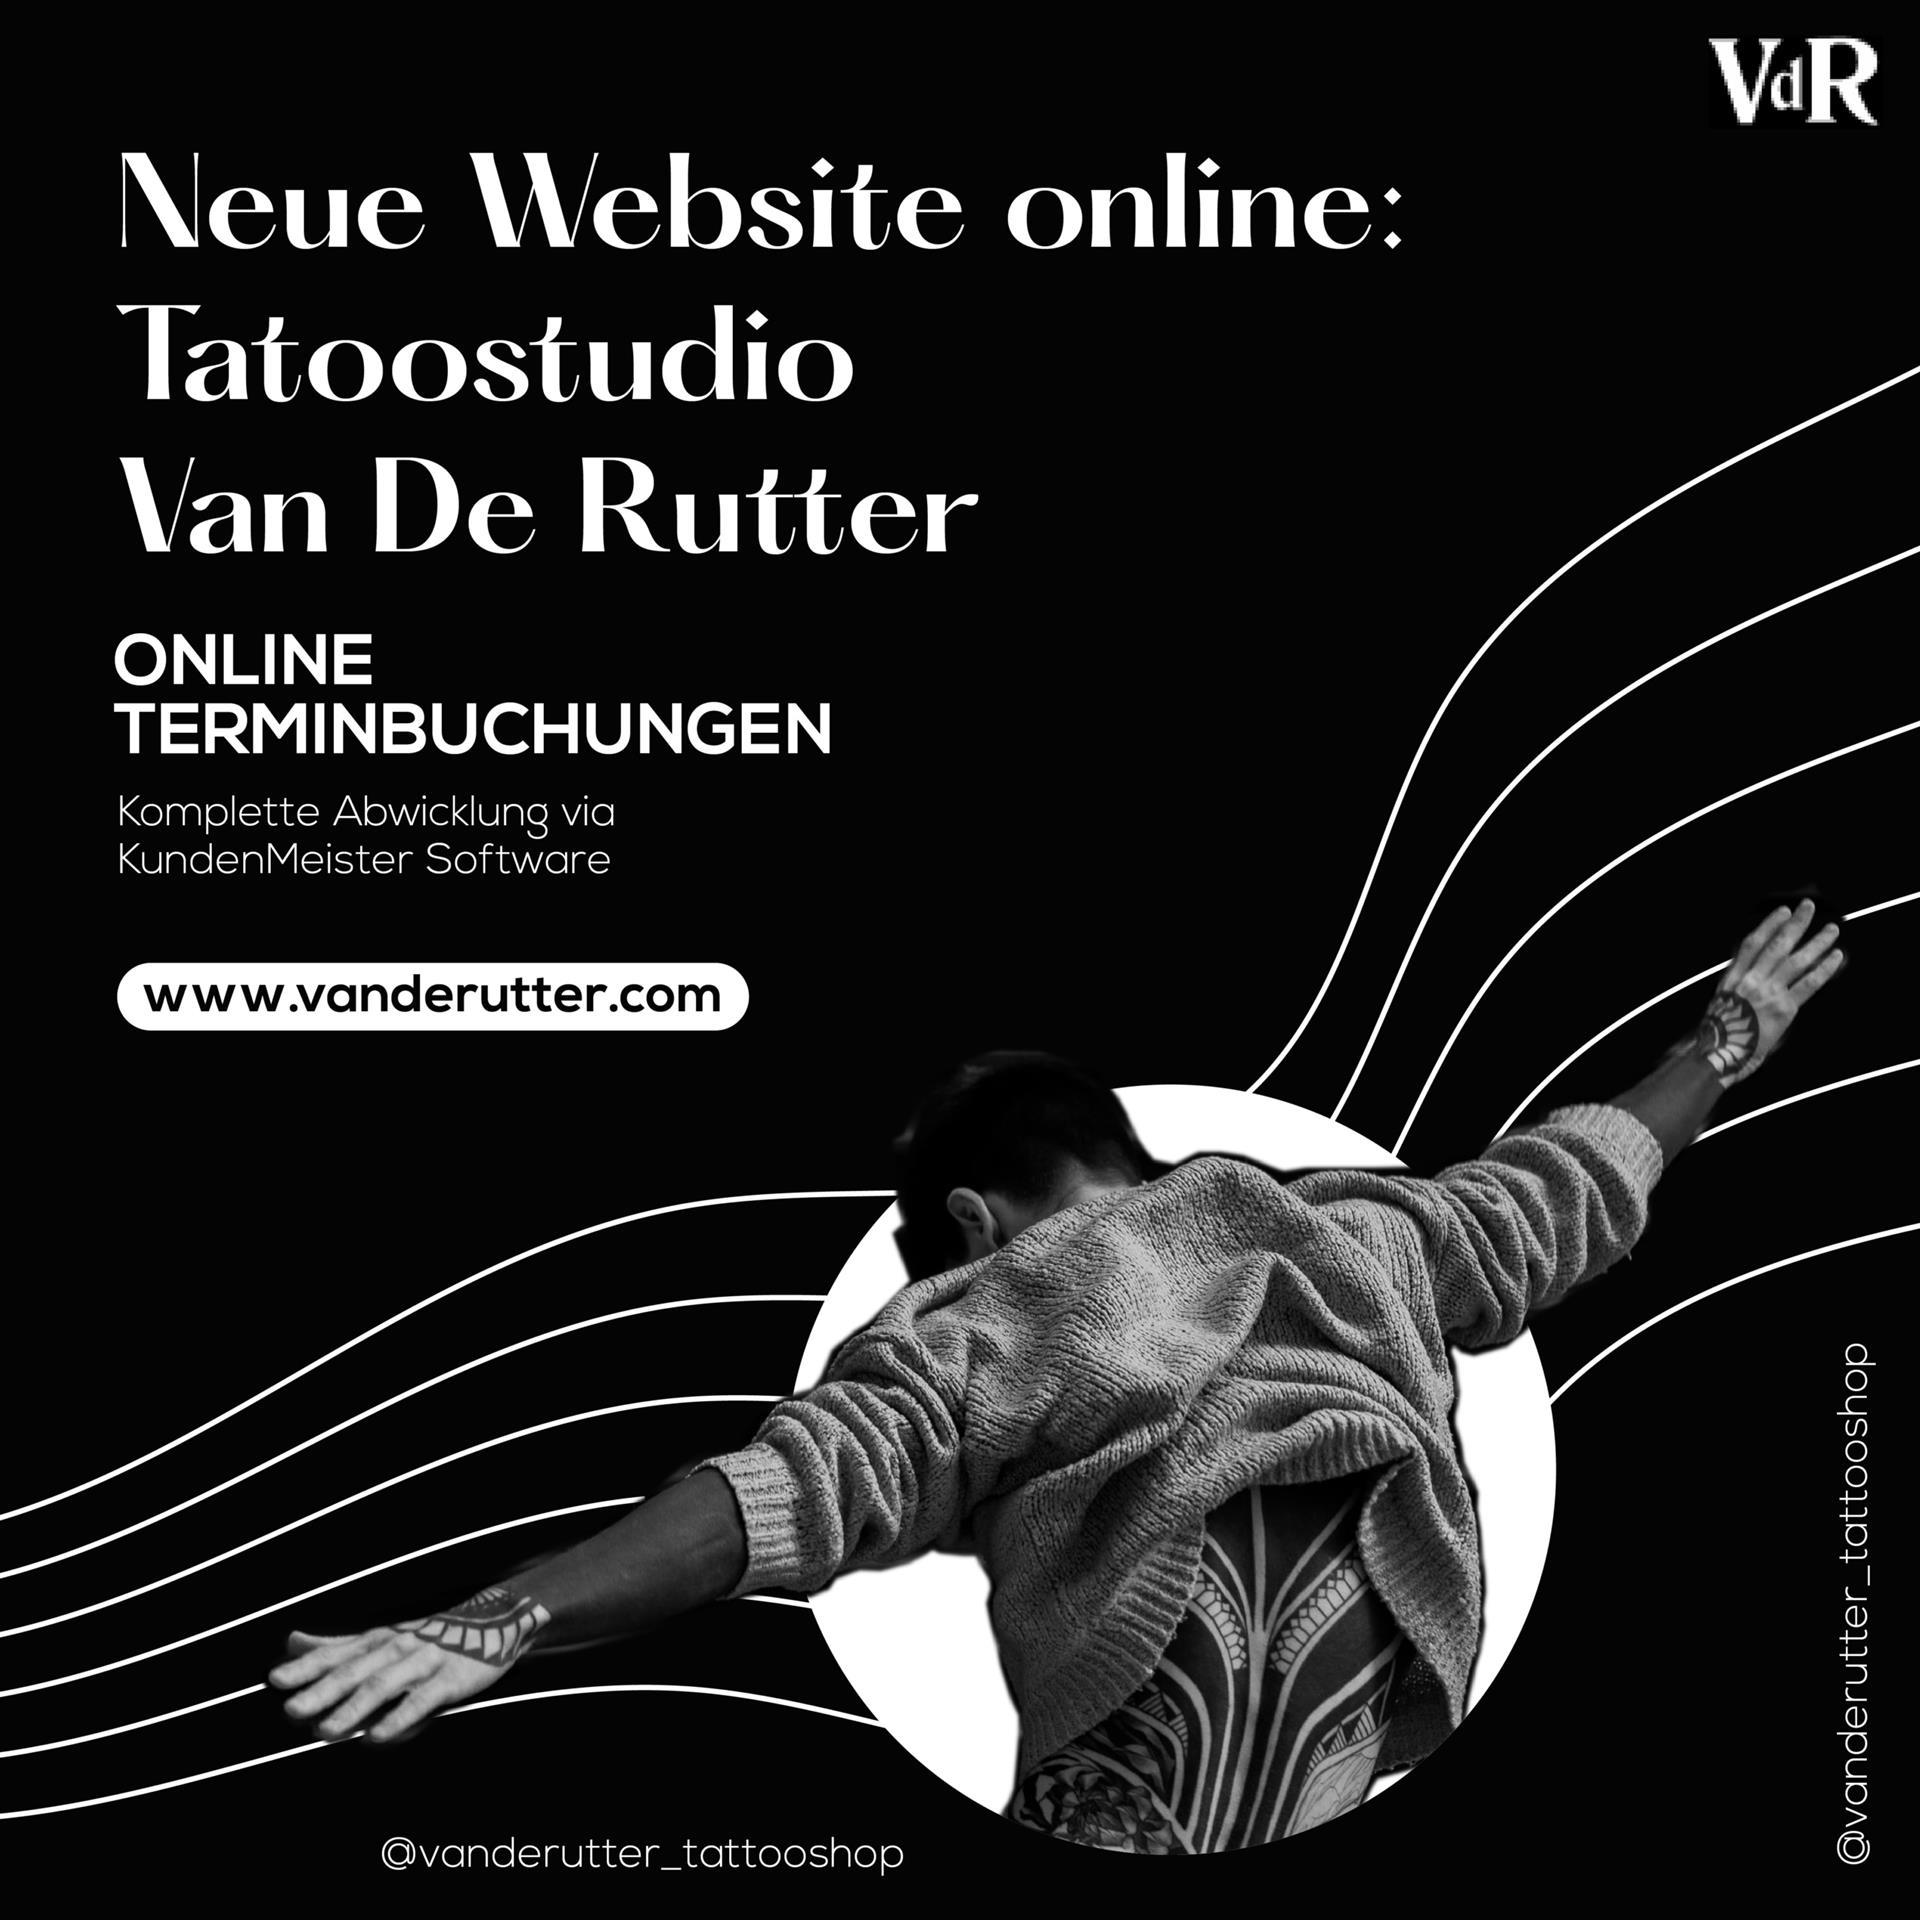 Van de Rutter új honlapja